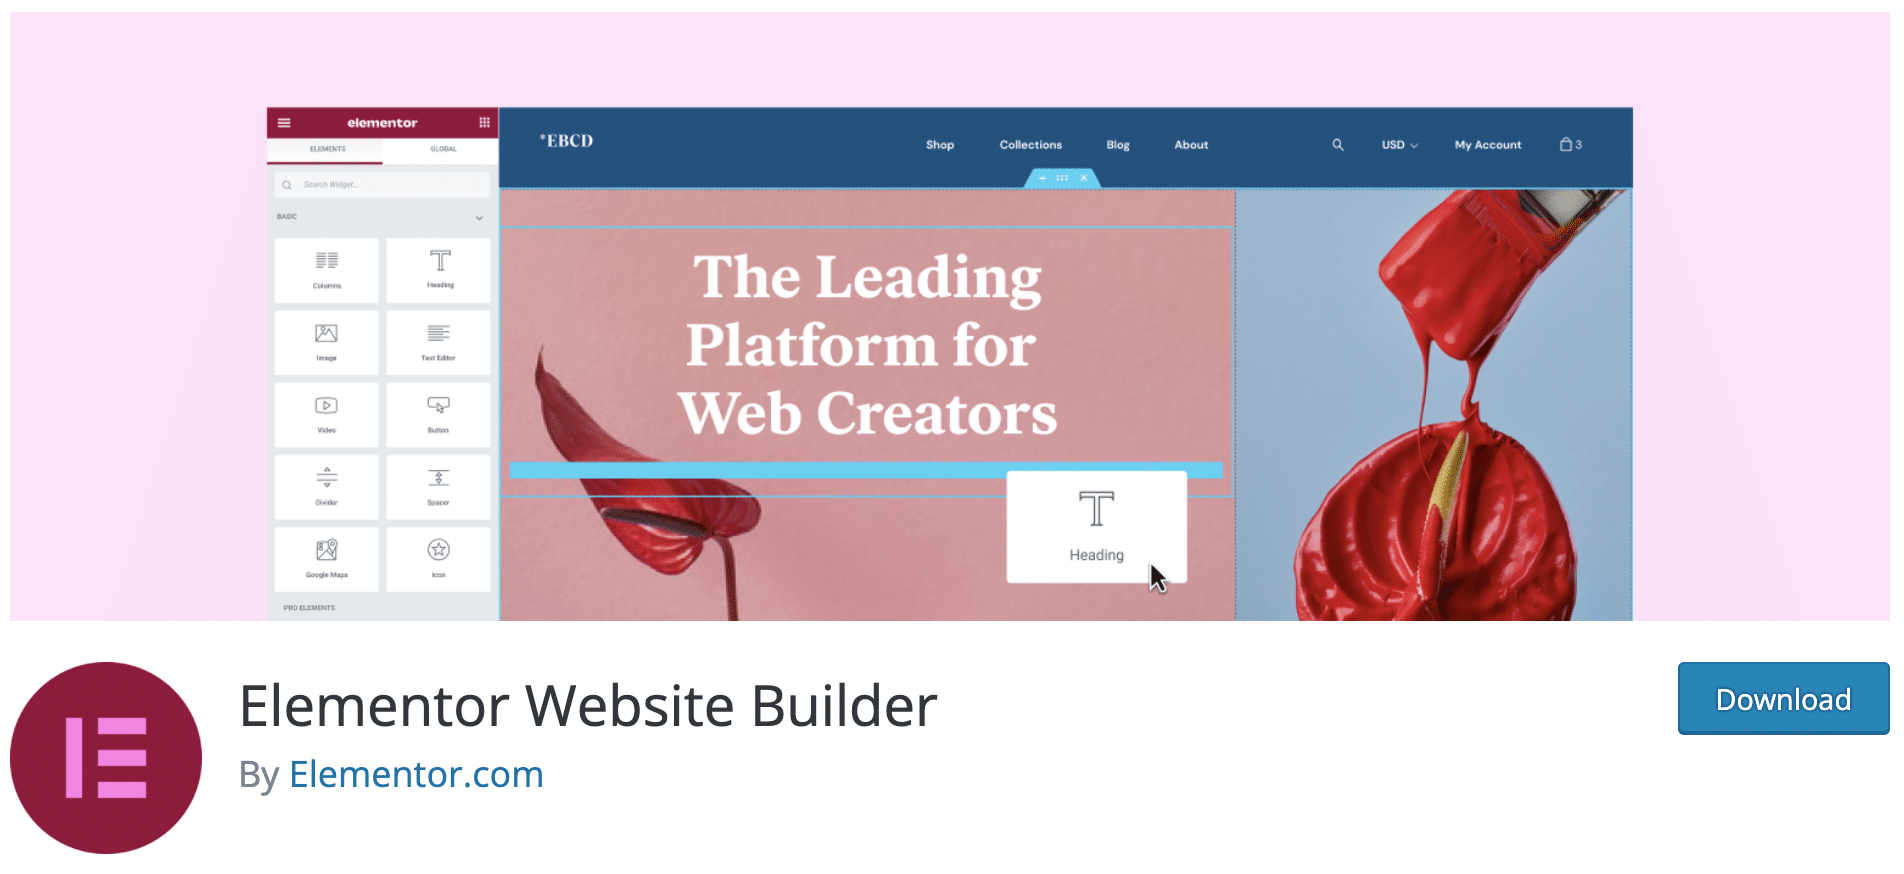 Elementor Website Builder to download on the WordPress directory.